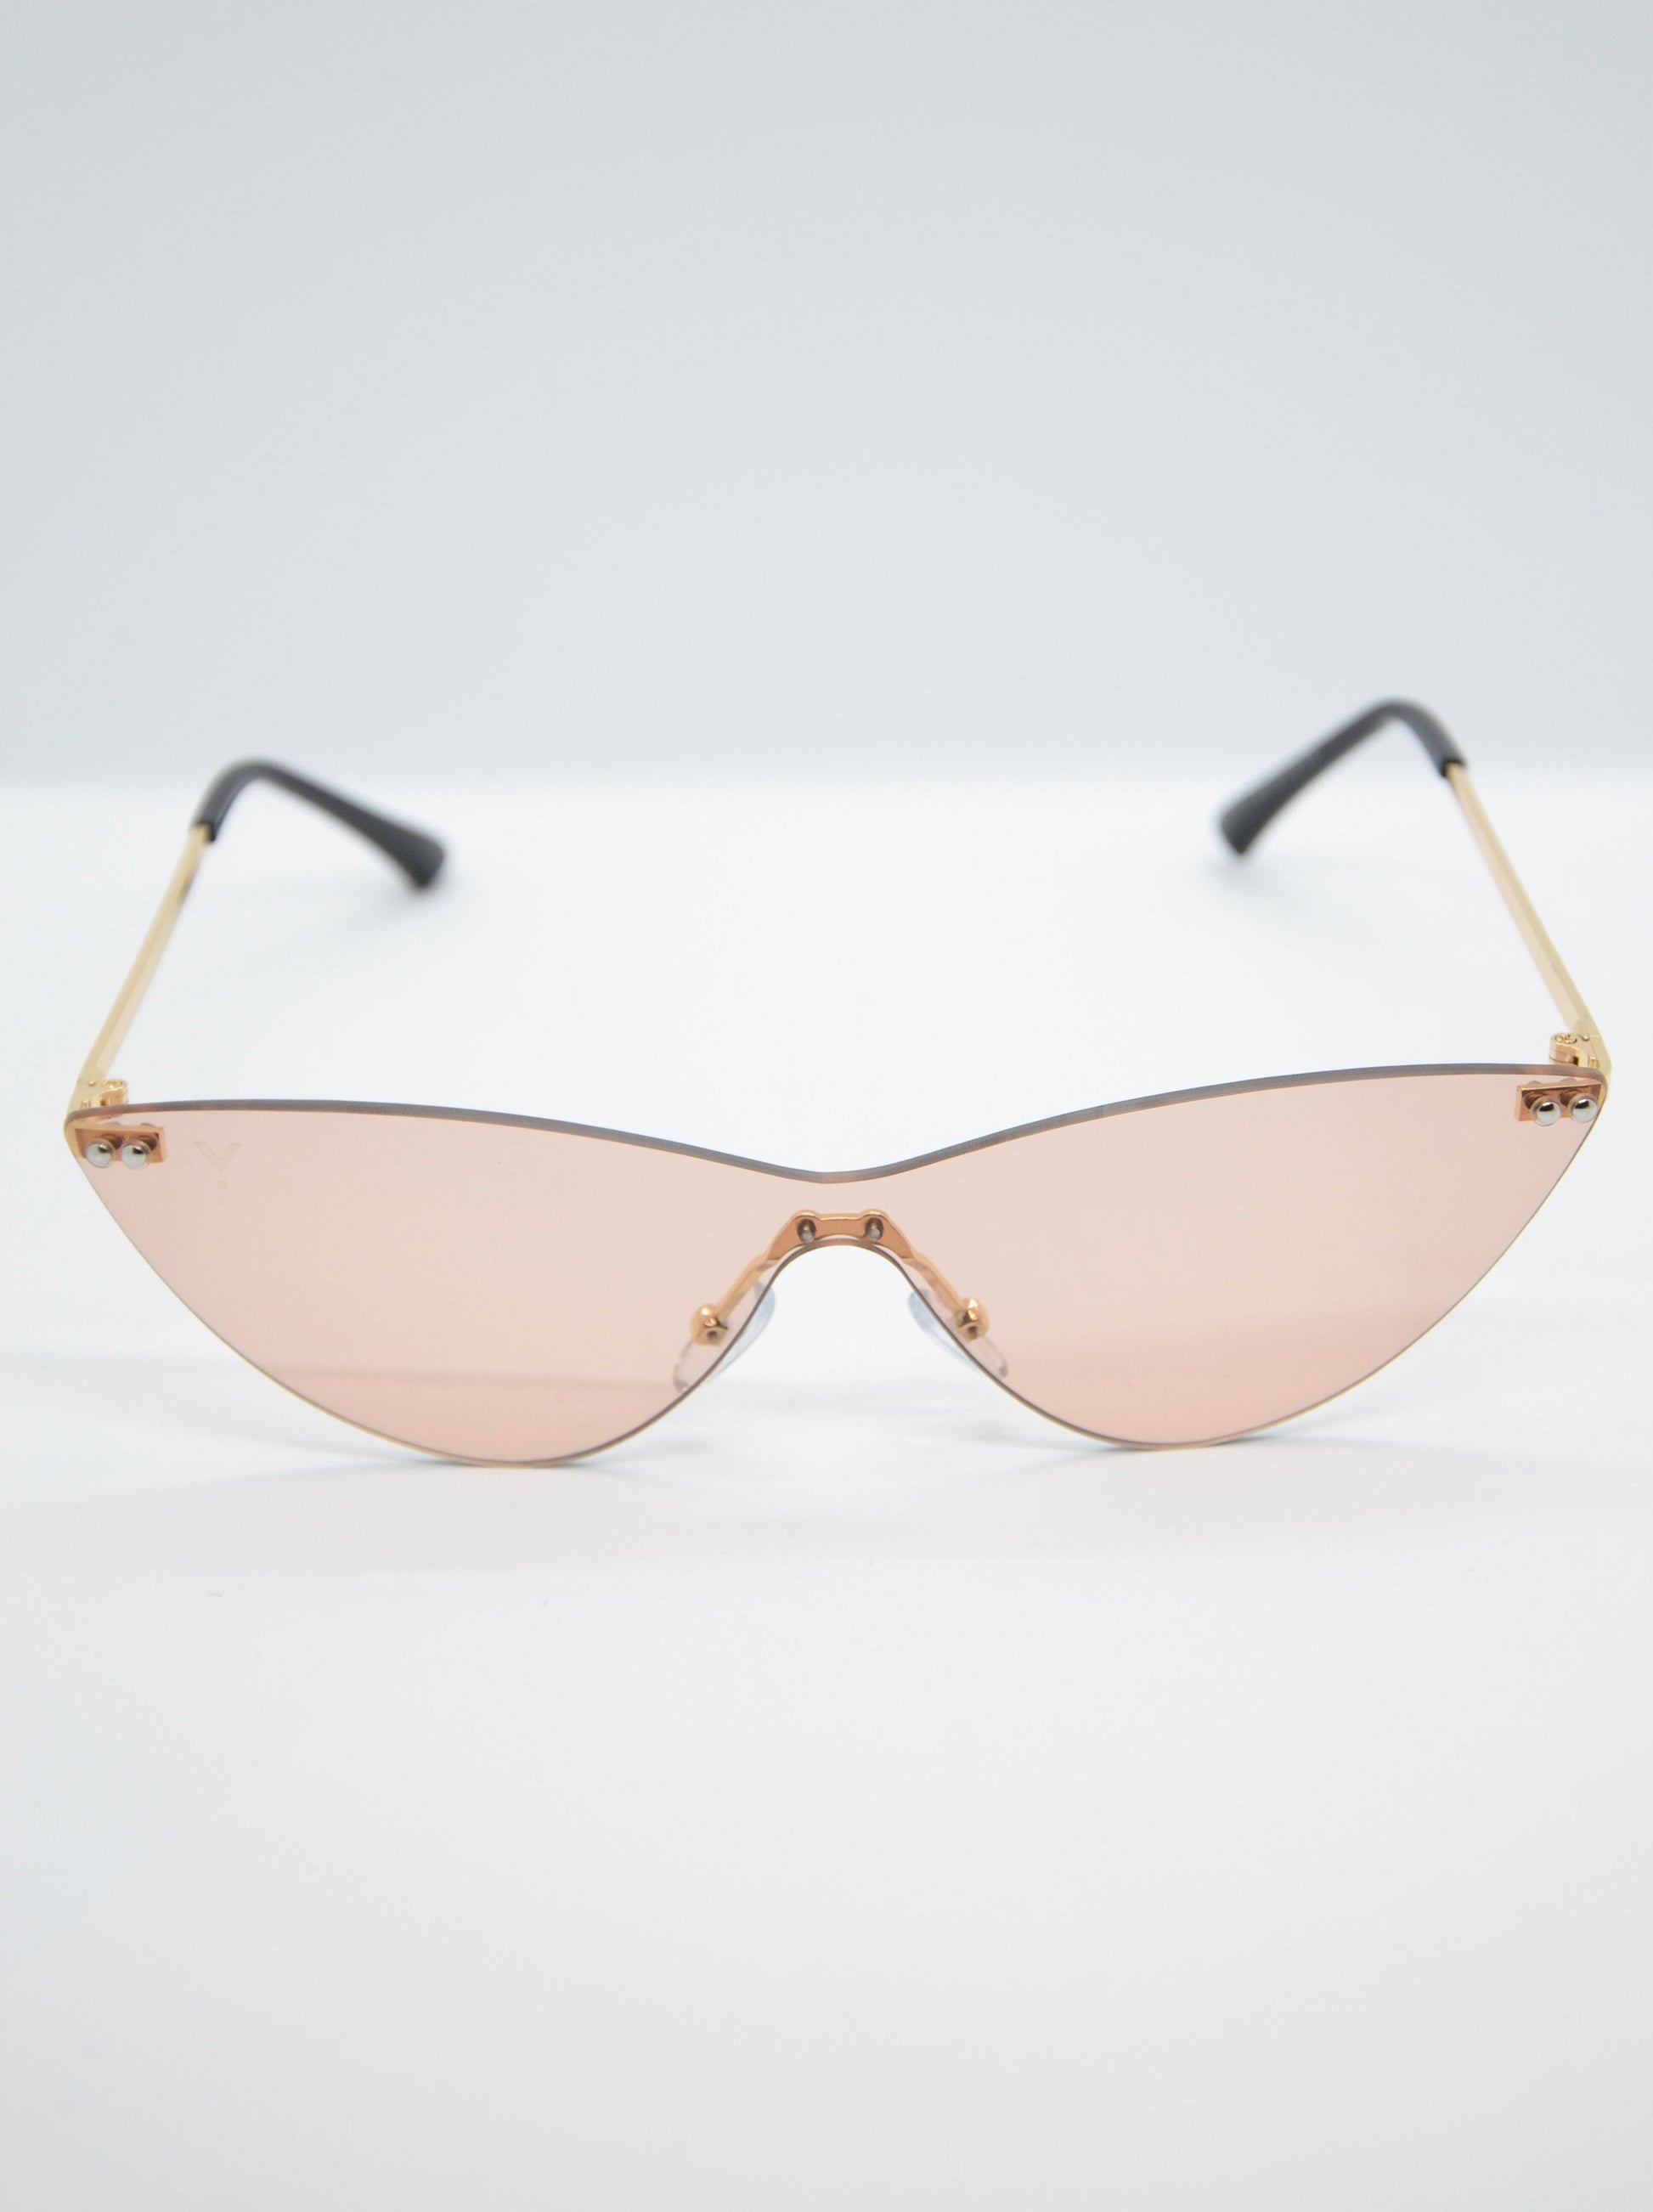 Inex - Sunglasses | AVAYOS